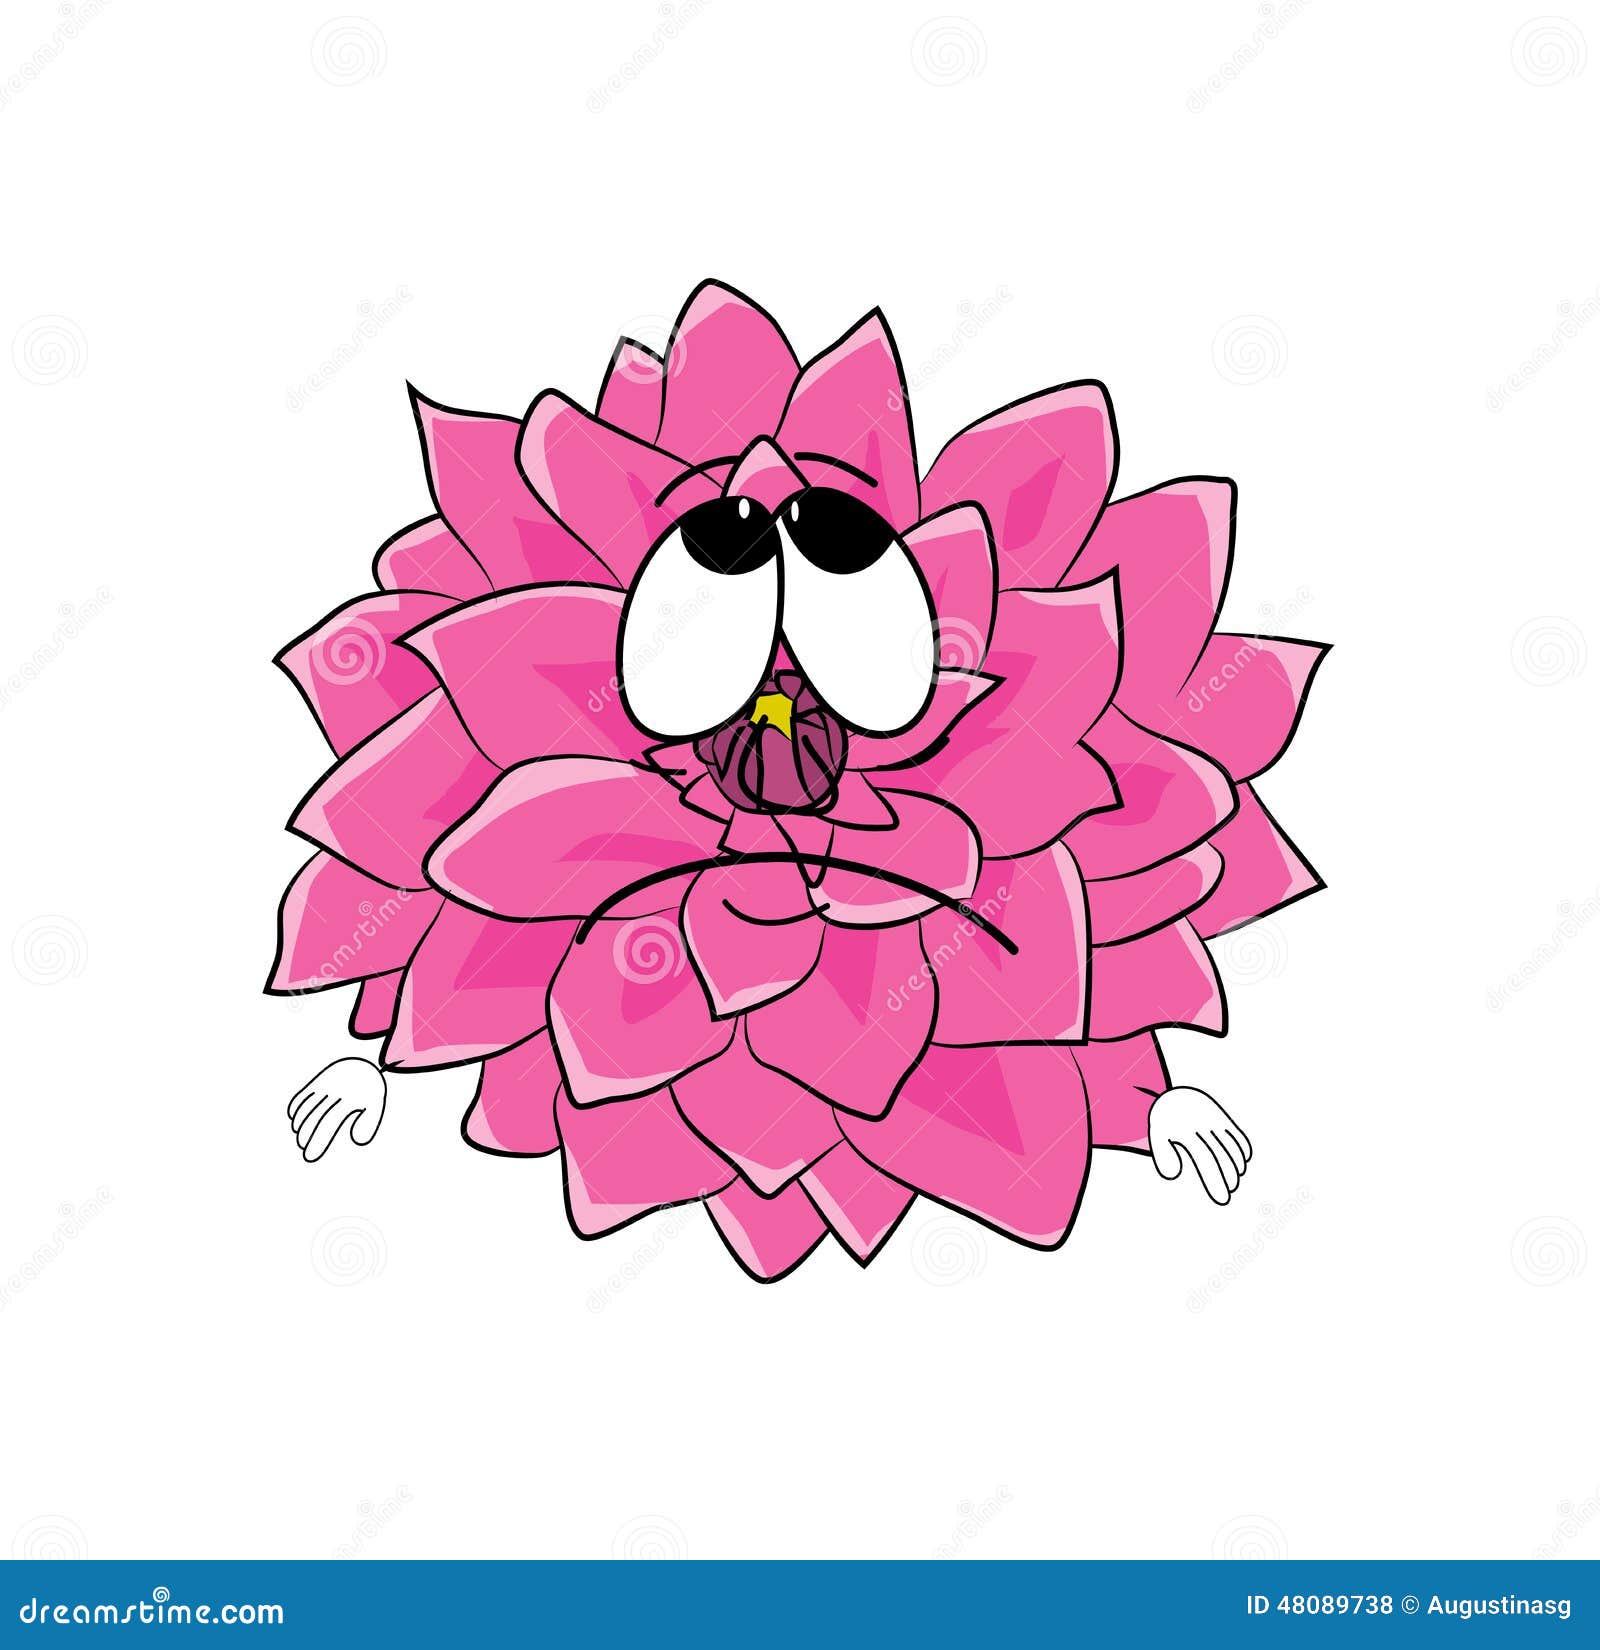  Sad  dahlia flower  cartoon  stock illustration Illustration 